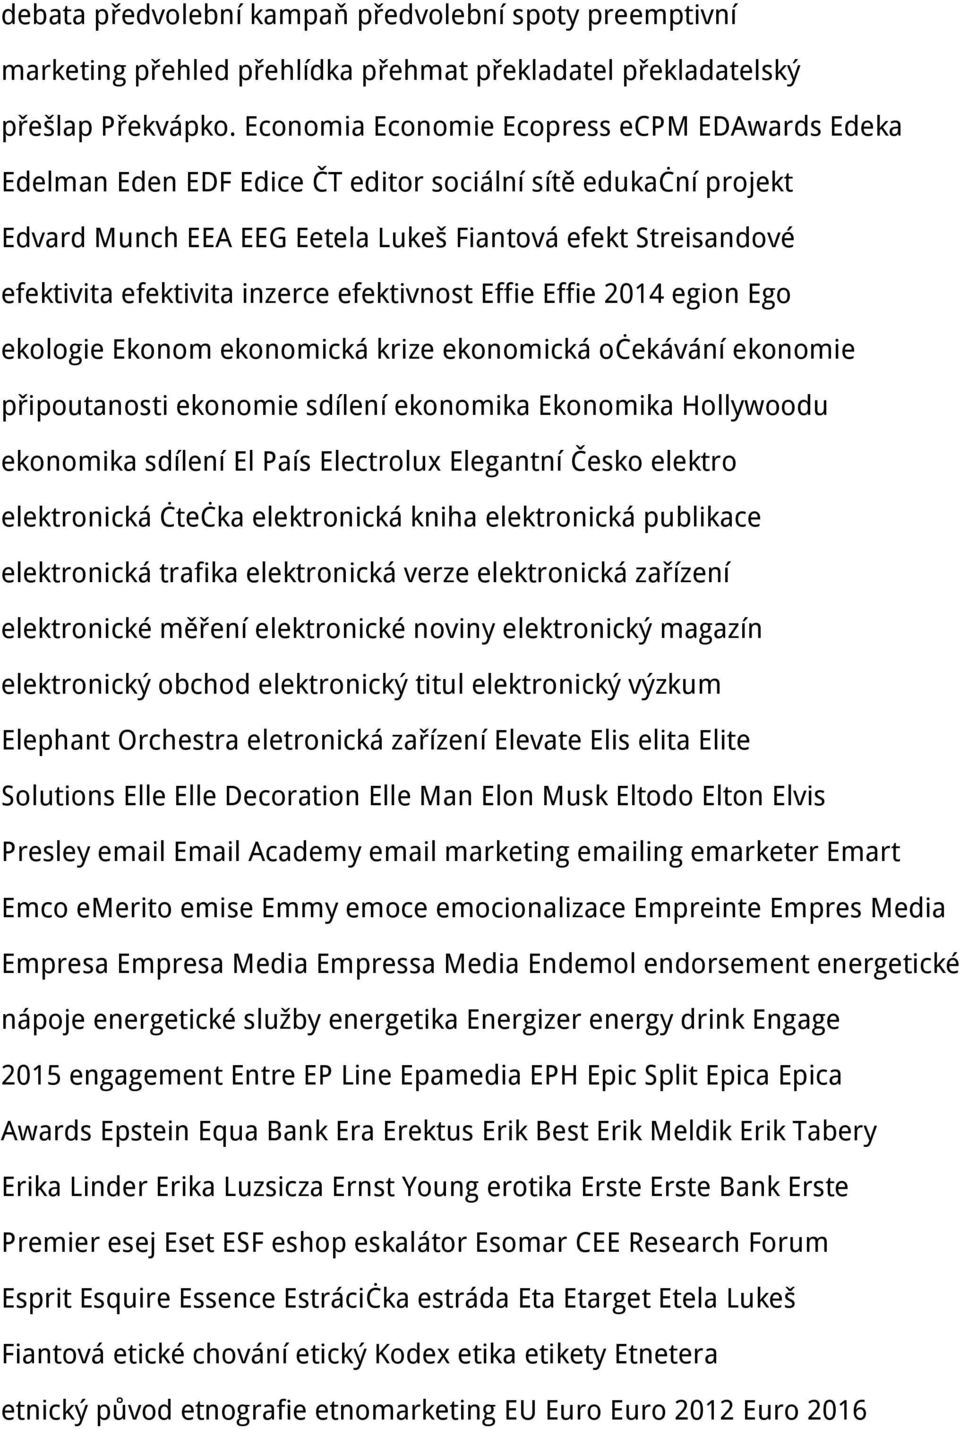 inzerce efektivnost Effie Effie 2014 egion Ego ekologie Ekonom ekonomická krize ekonomická očekávání ekonomie připoutanosti ekonomie sdílení ekonomika Ekonomika Hollywoodu ekonomika sdílení El País